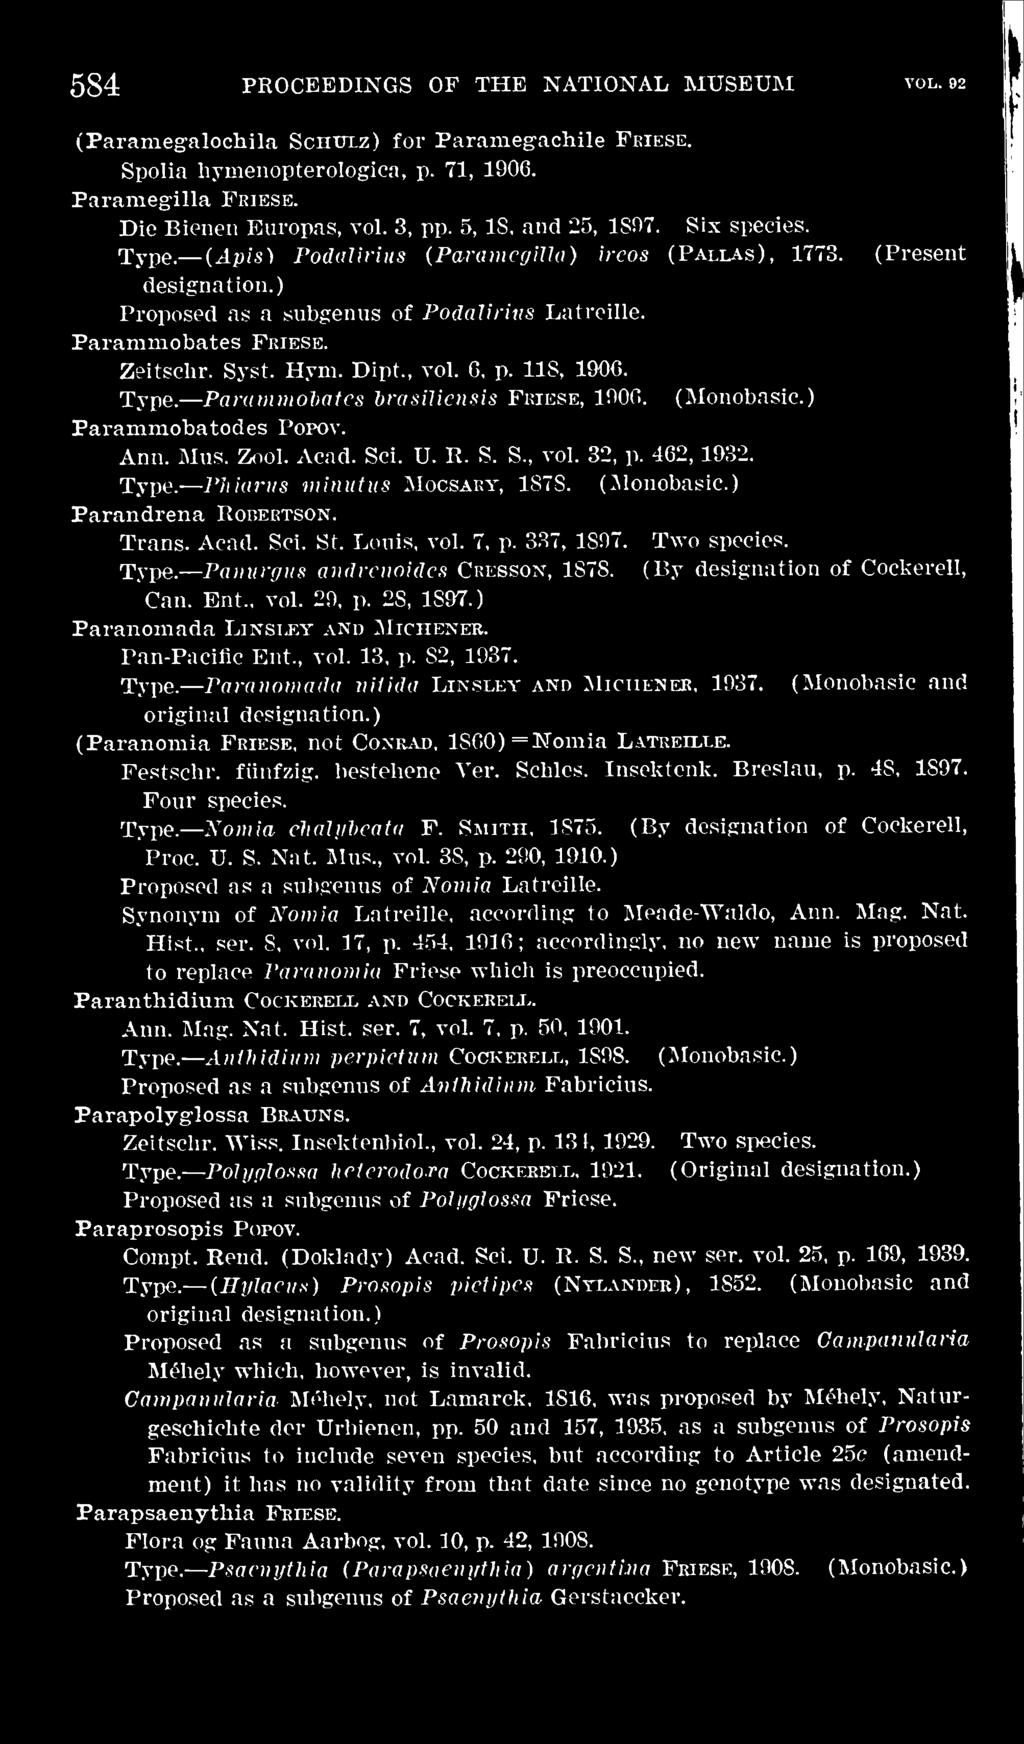 6, p. 118, 190C. Parinnmohatcs hrasilictisis Fkiese, IDOO. (Monobasic.) Parammobatodes Popov. Ann. Mus. Zool. Acad. Sci. U. R. S. S., vol. 32, p. 4G2, 1932. Phiarns minutus Mocsaey, 1S7S. (Monobasic.) Parandrena Robertson.